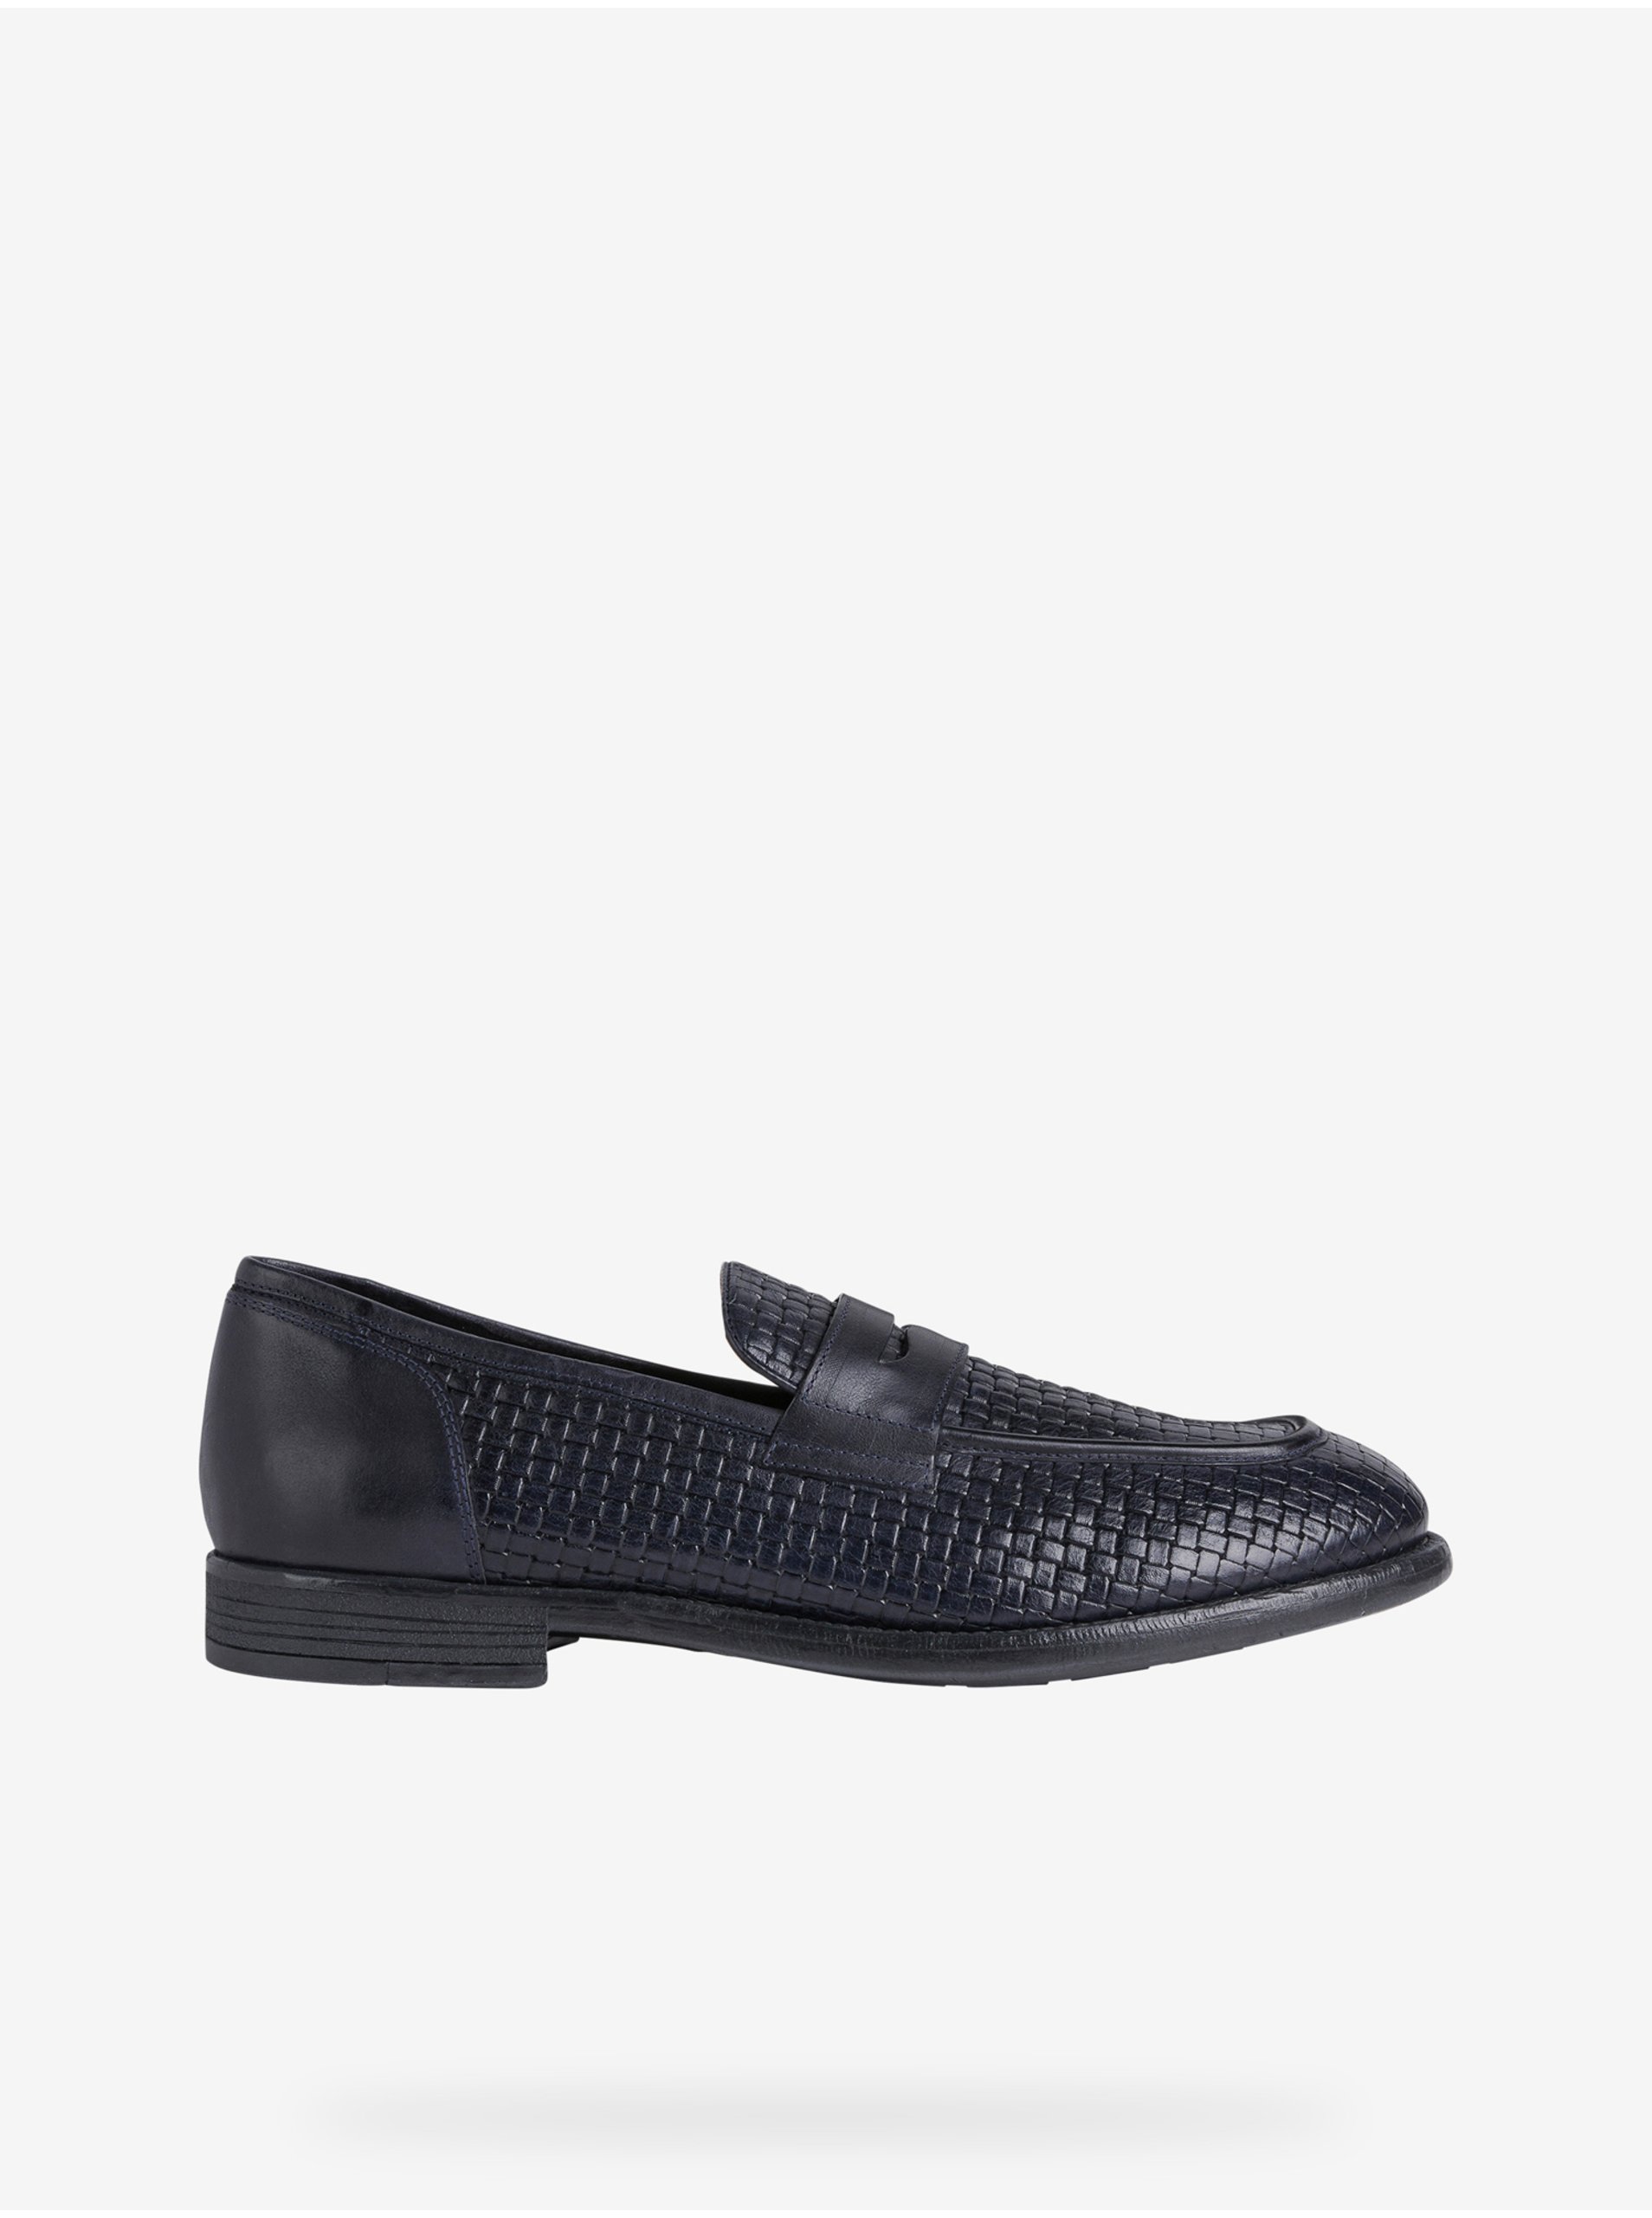 Dark blue men's leather loafers Geox Anghiari - Men's